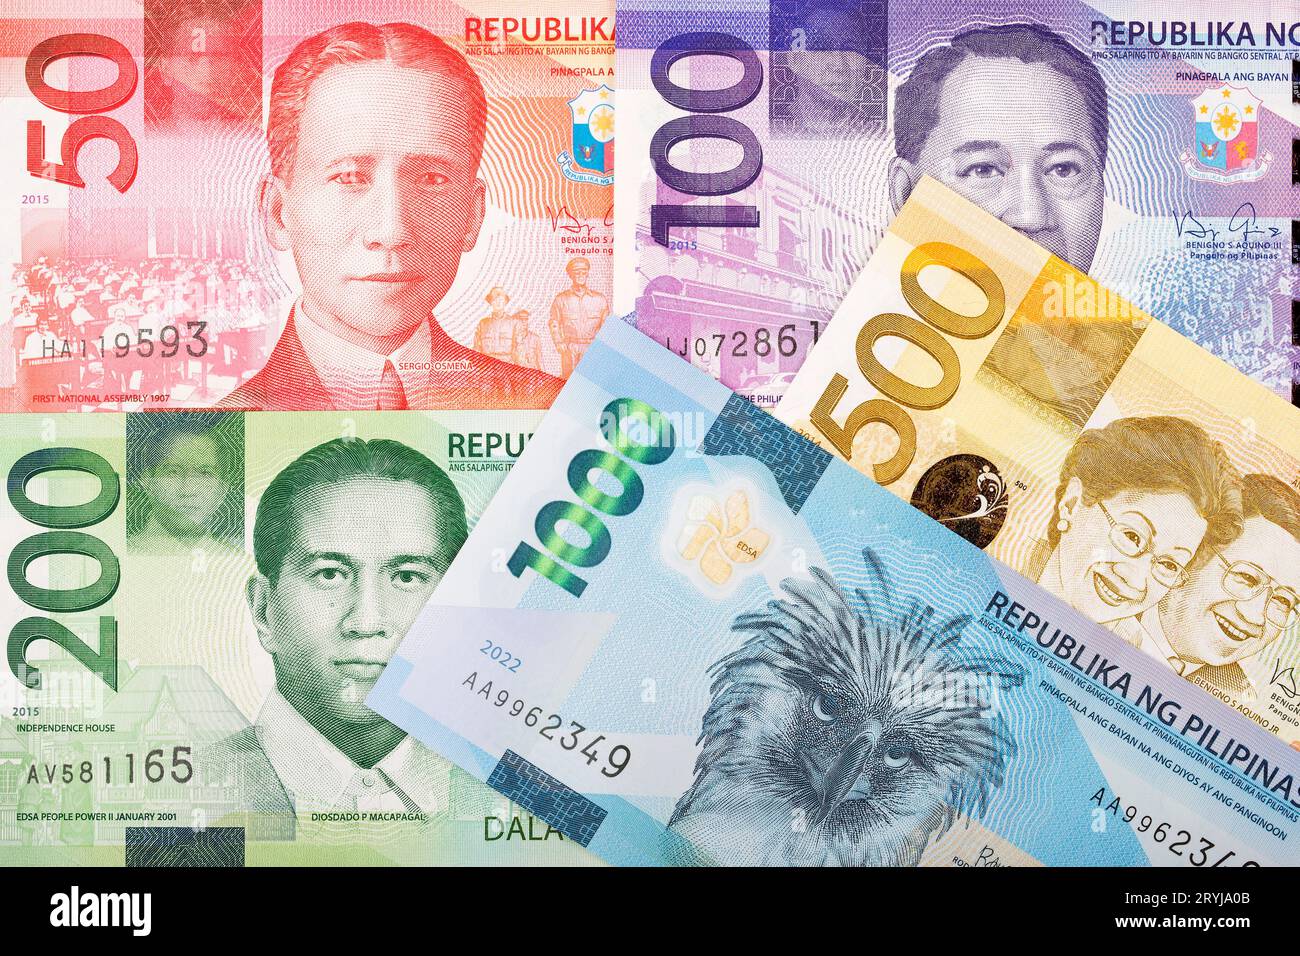 Philippine money - new series of banknotes Stock Photo